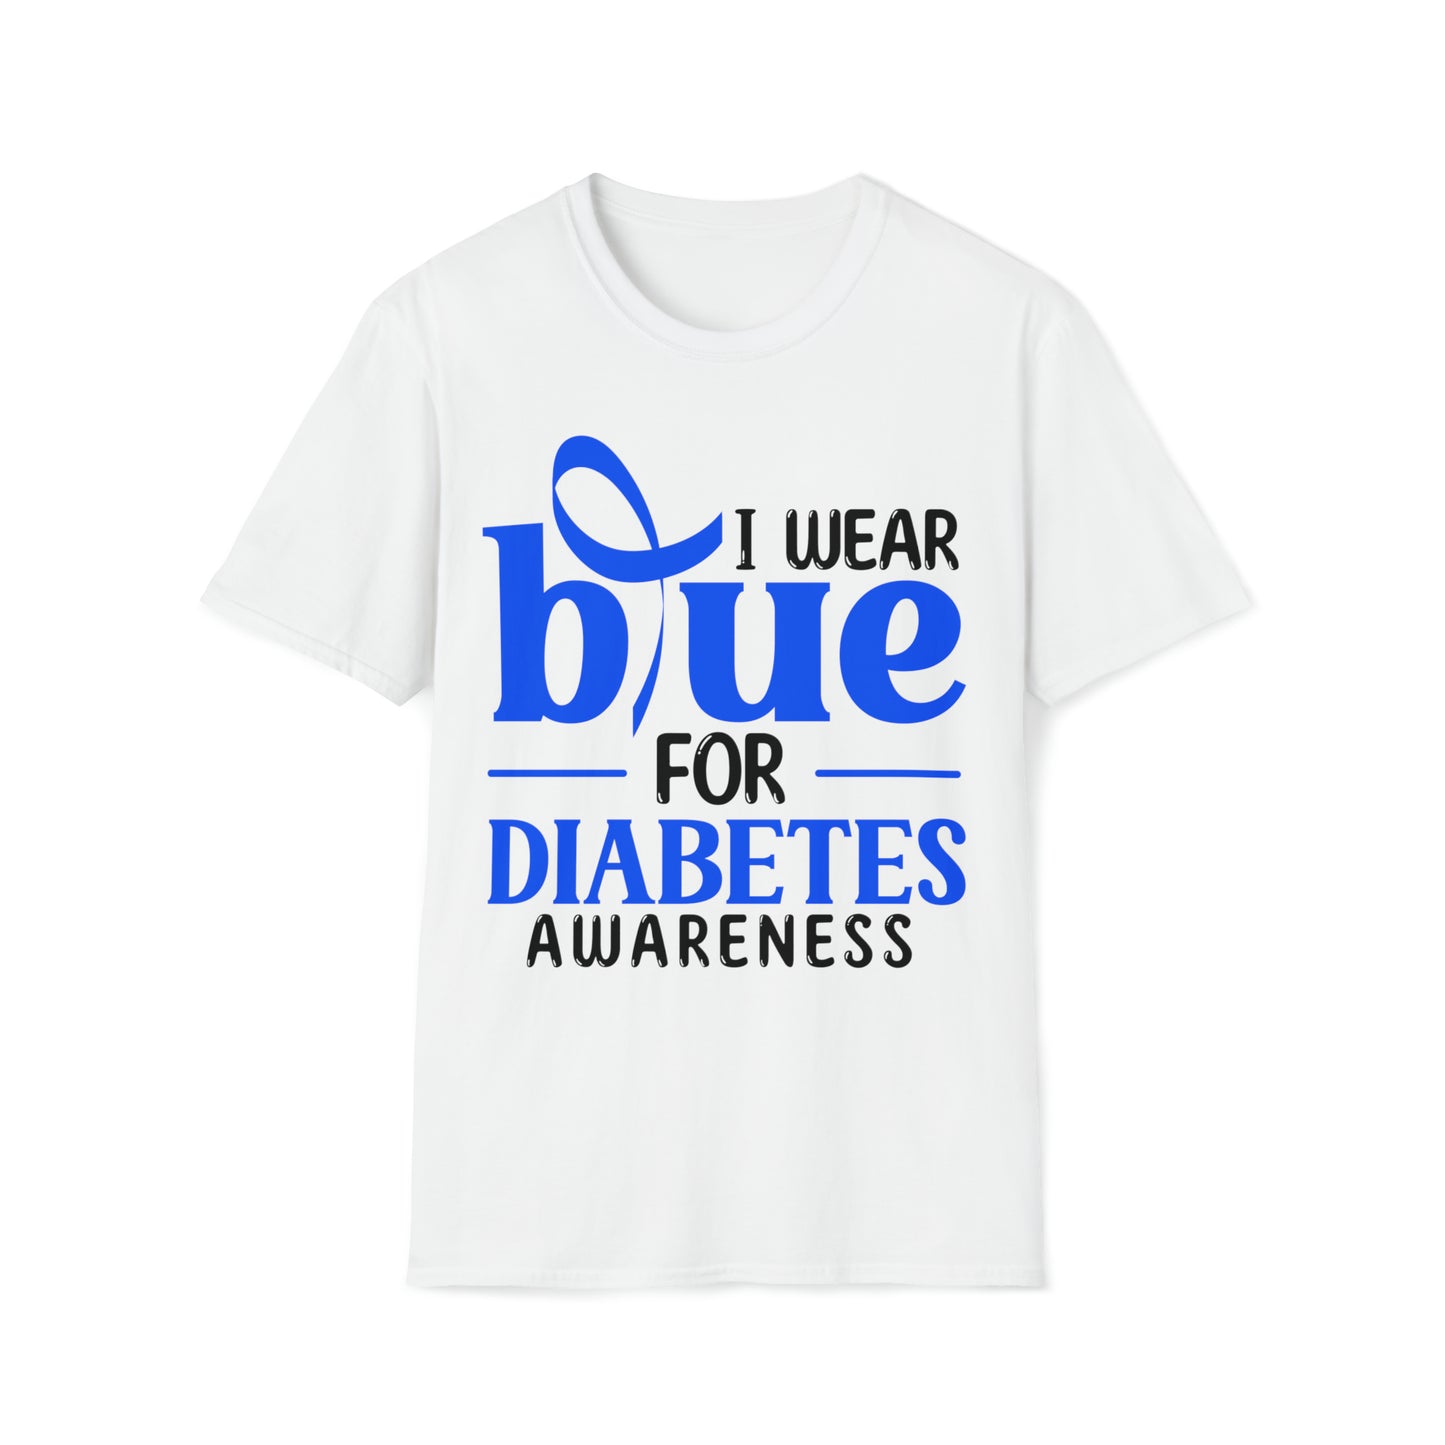 I Wear Blue for Diabetes Awareness Shirt